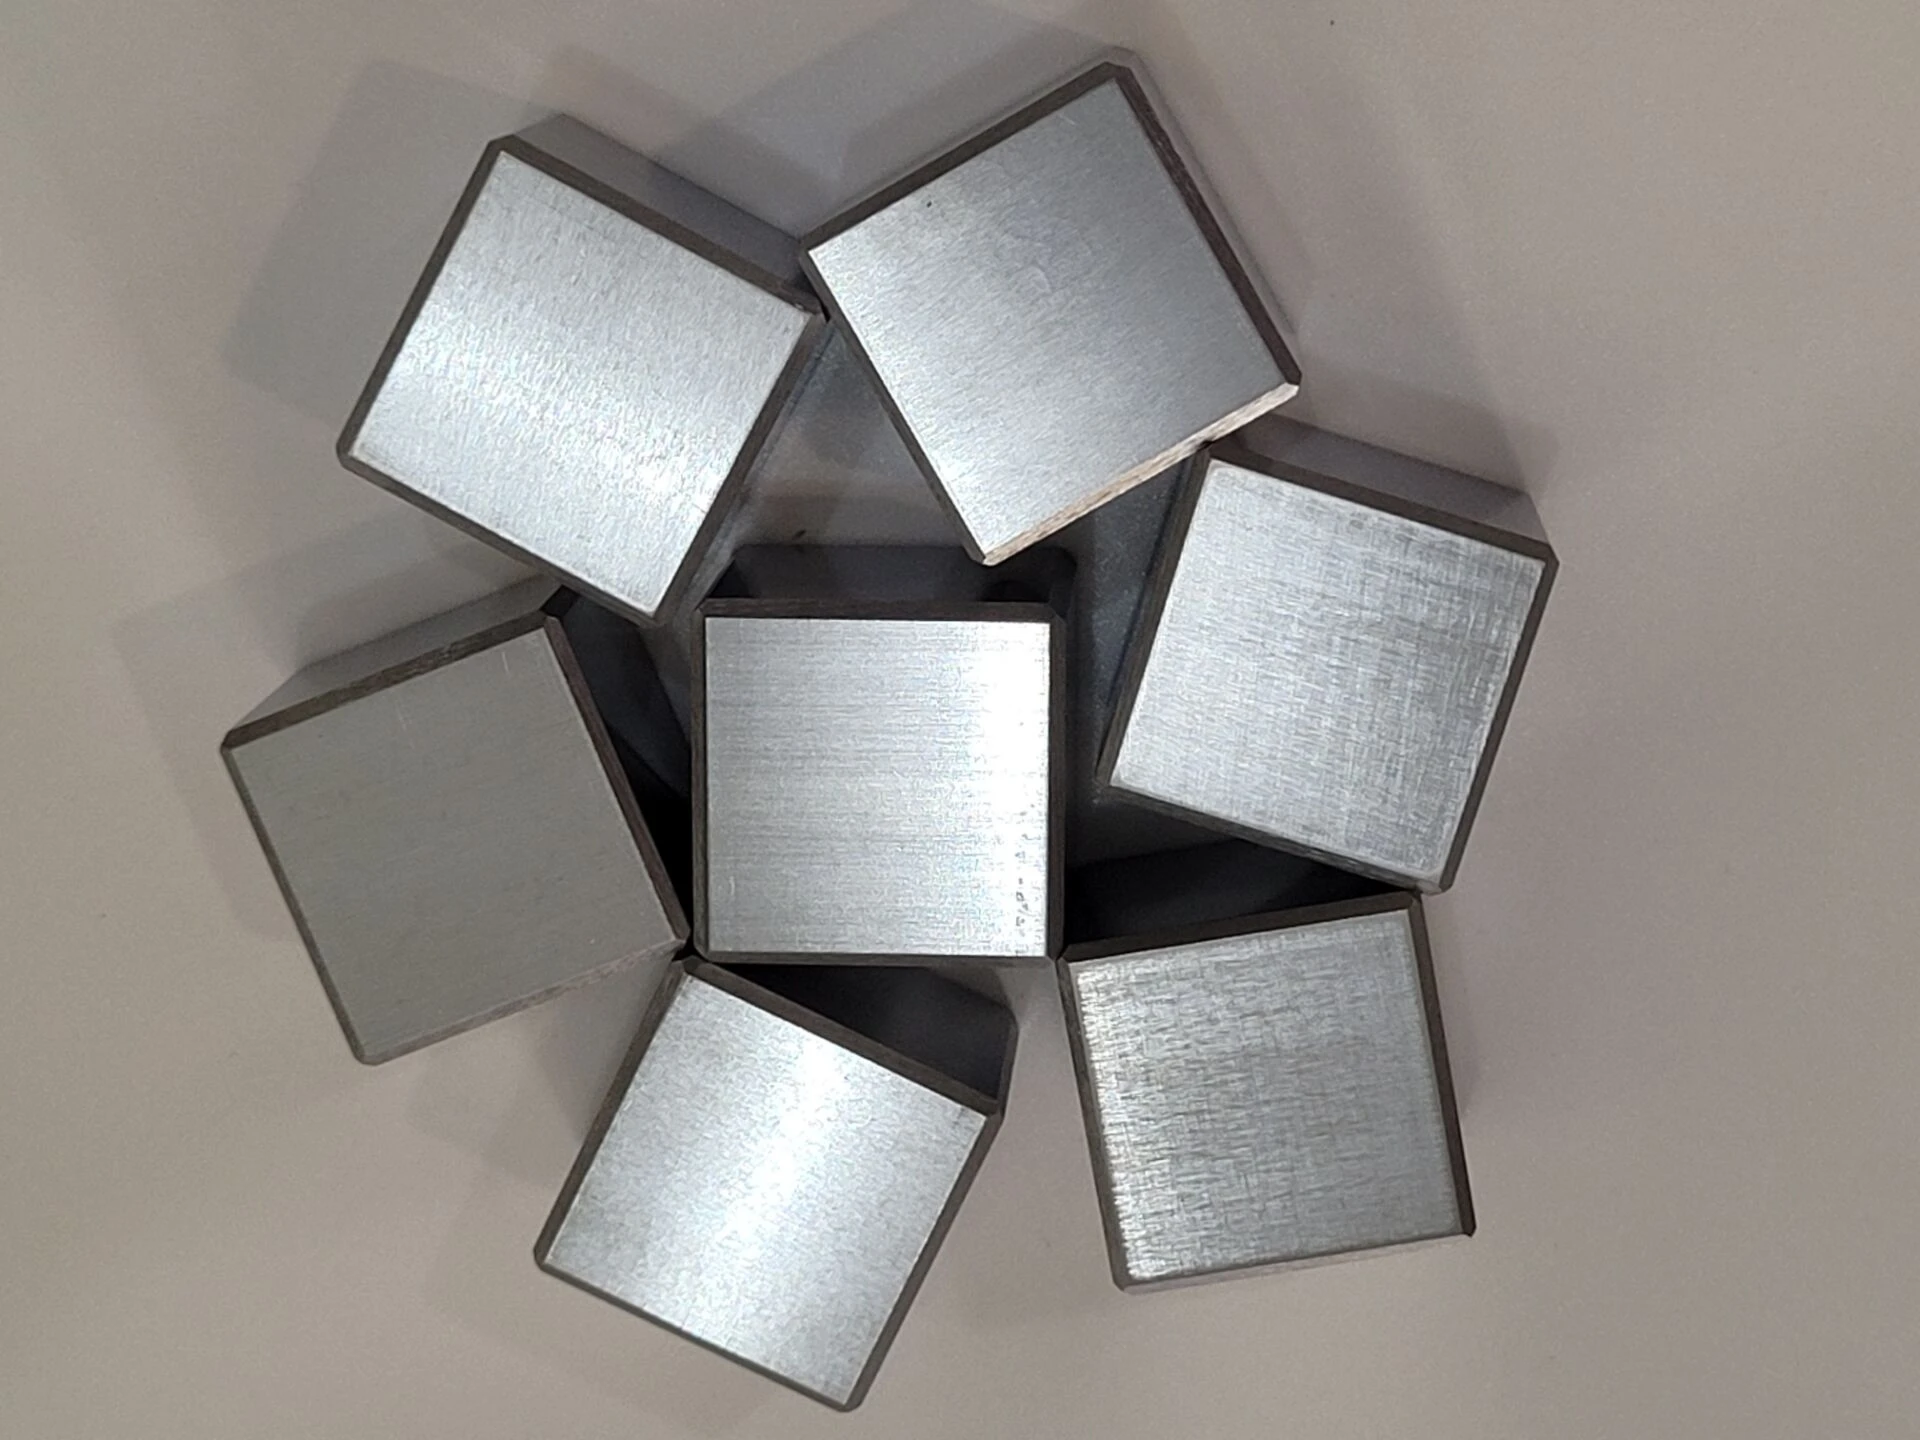 Element Cube Set 10mm Density Cubes Up to 99.99% Pure Daily Metal Cubest Niobium, Nickel, Copper, Titanium and Tungsten Me